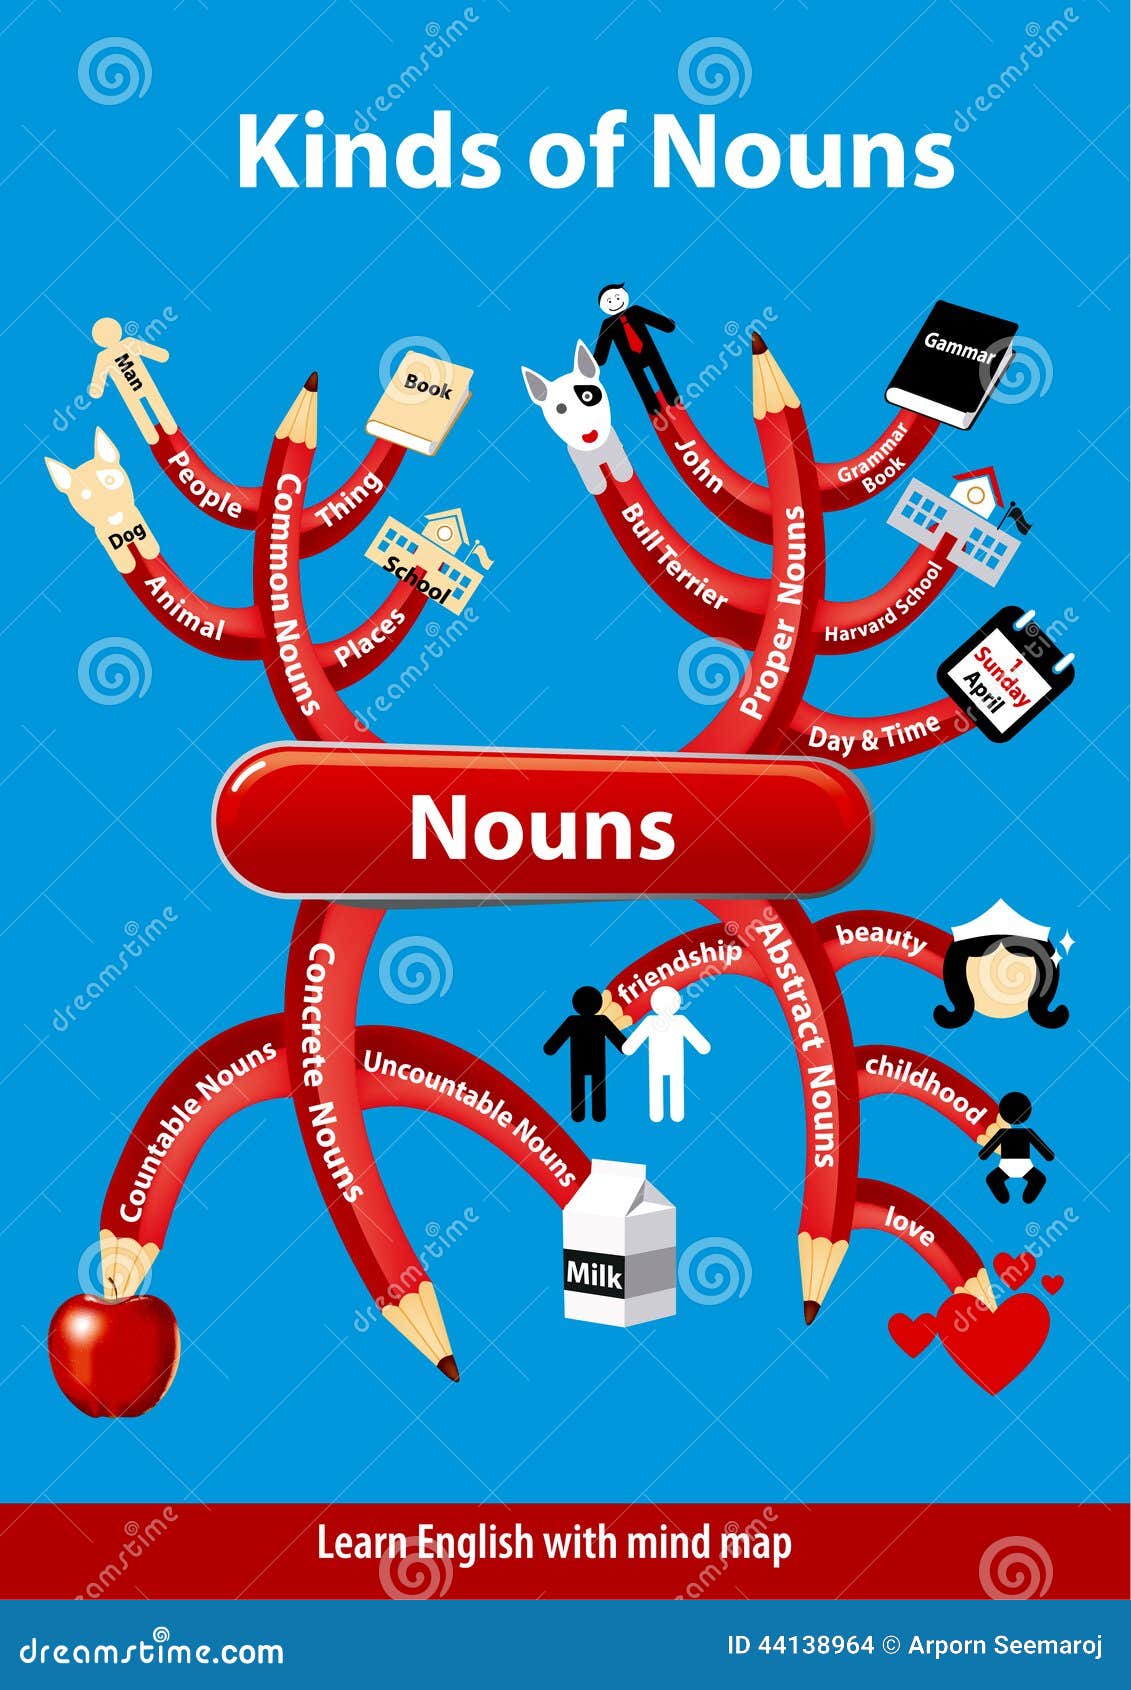 kinds of nouns